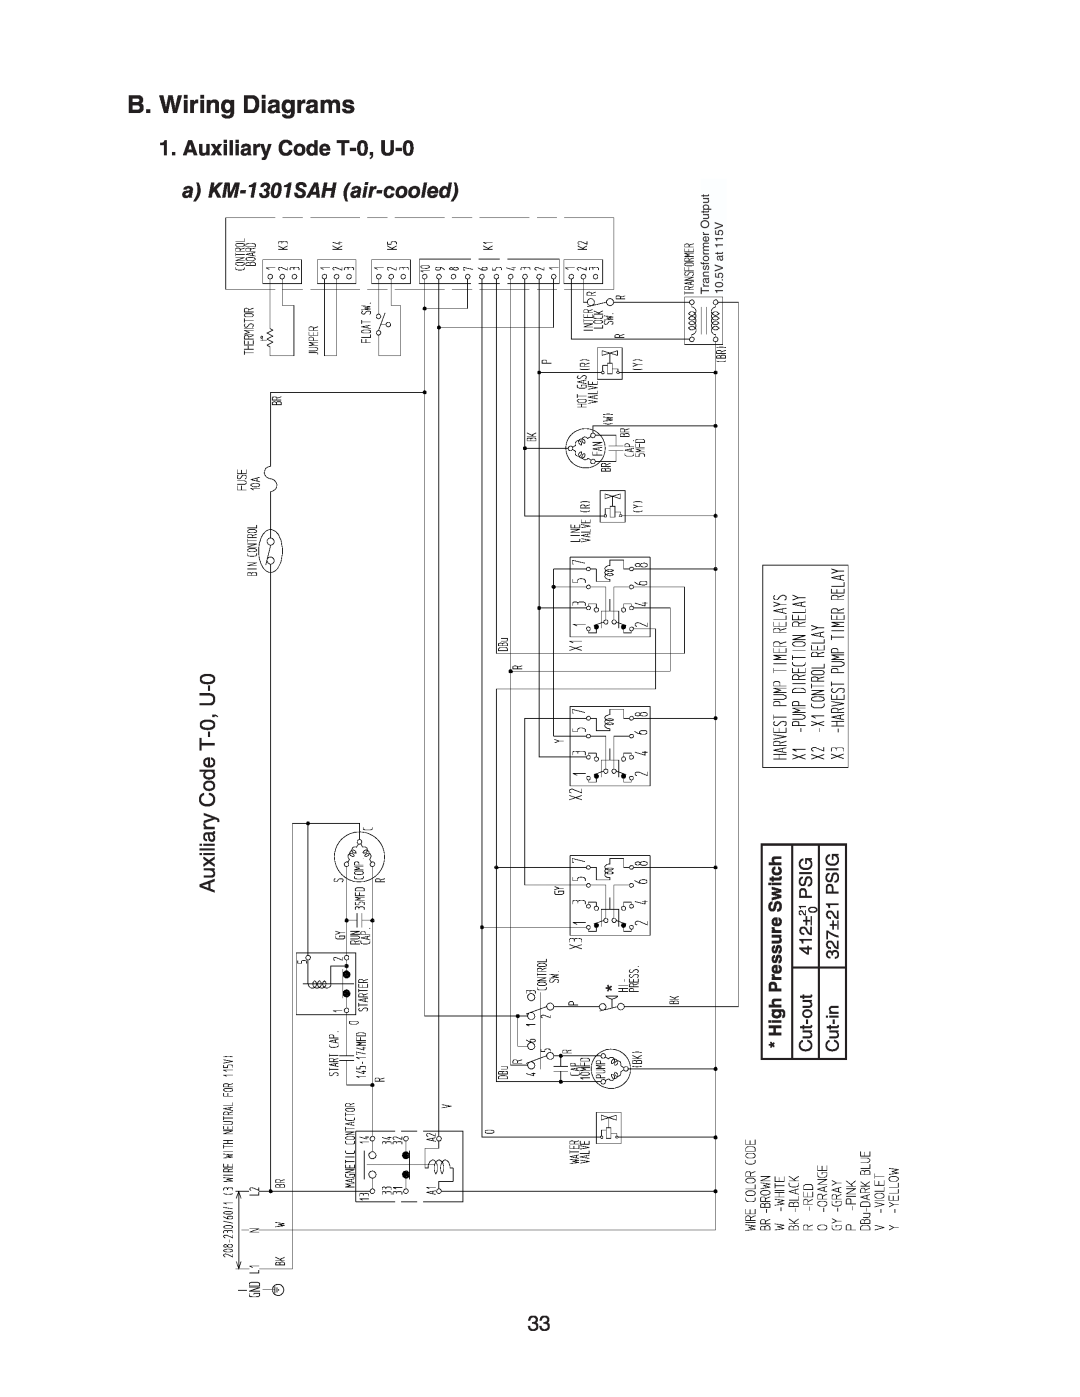 Hoshizaki KM-1301SAH/3 B. Wiring Diagrams, Auxiliary Code T-0, U-0, a KM-1301SAH air-cooled, Transformer Output 10.5V at 